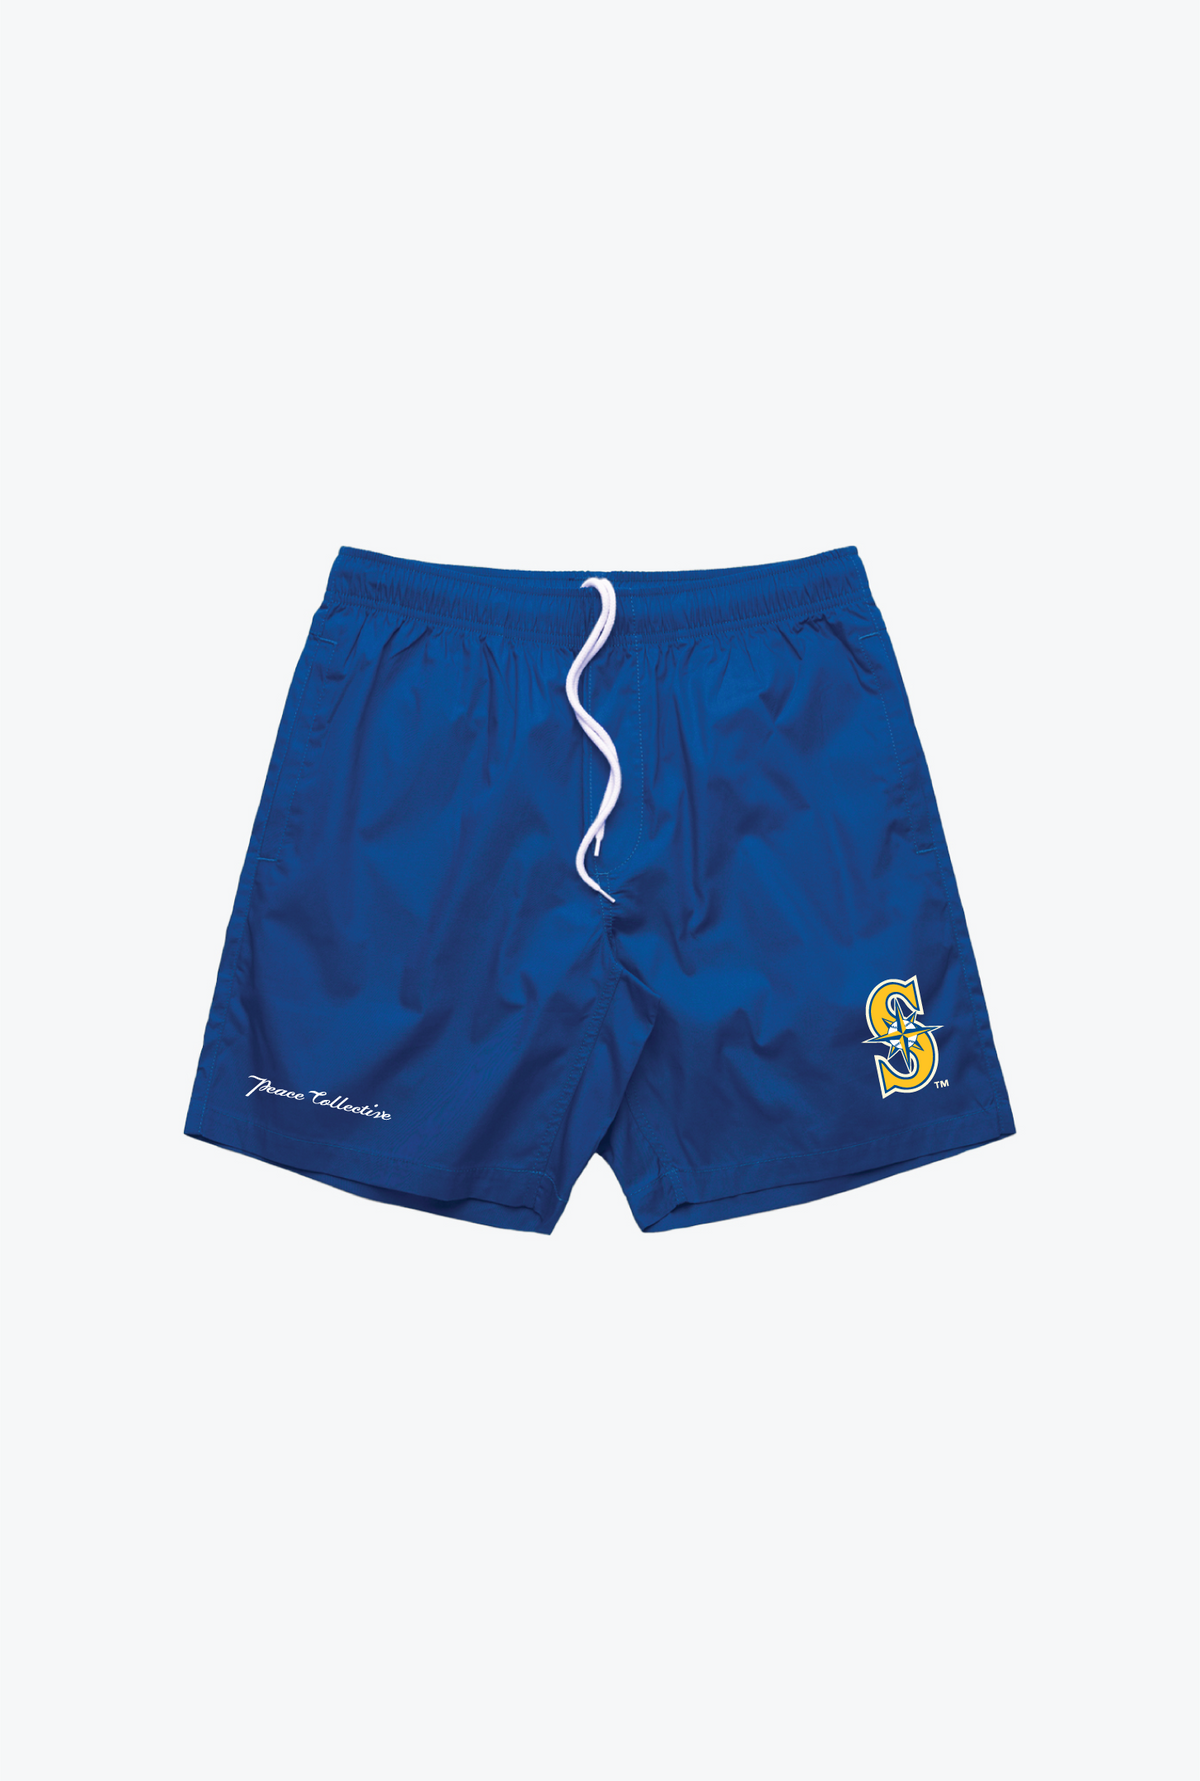 Seattle Mariners Board Shorts - Navy